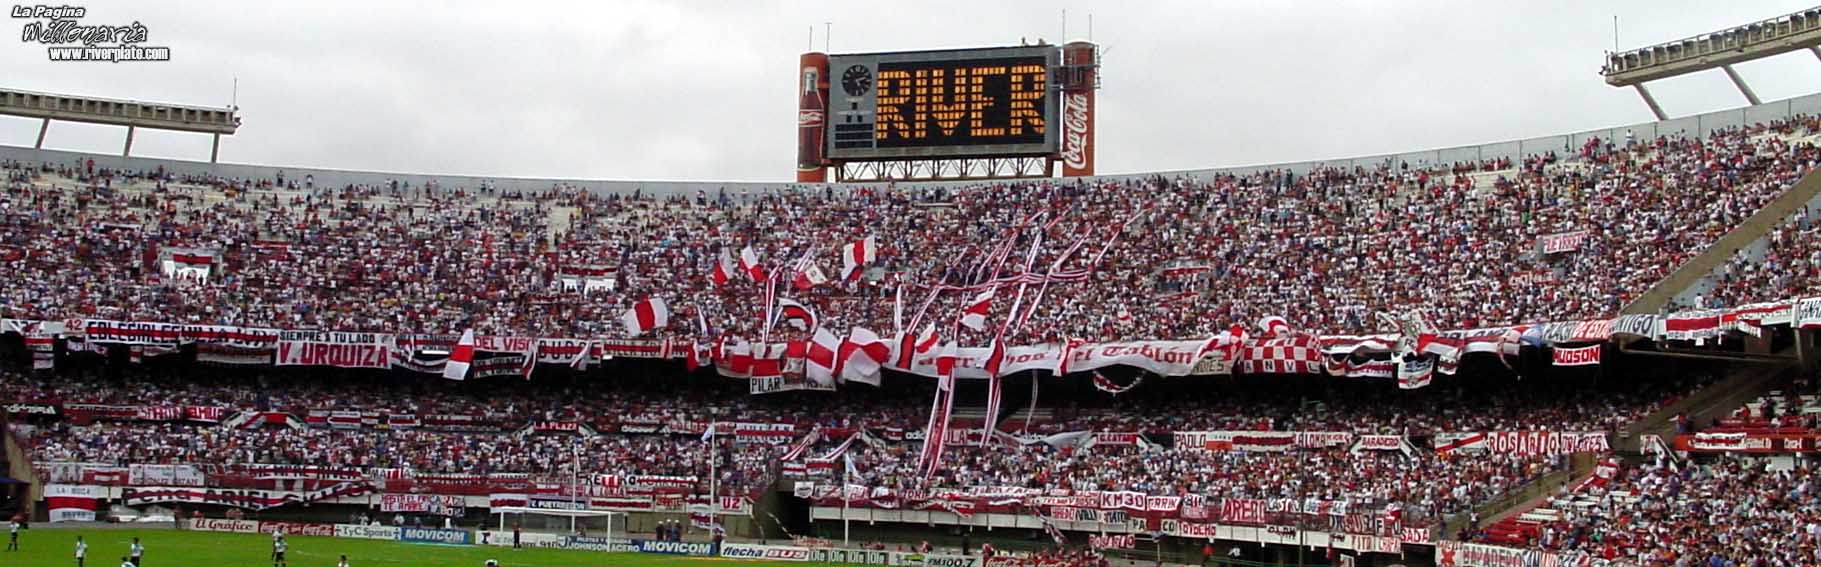 River Plate vs Banfield (CL 2002) 16